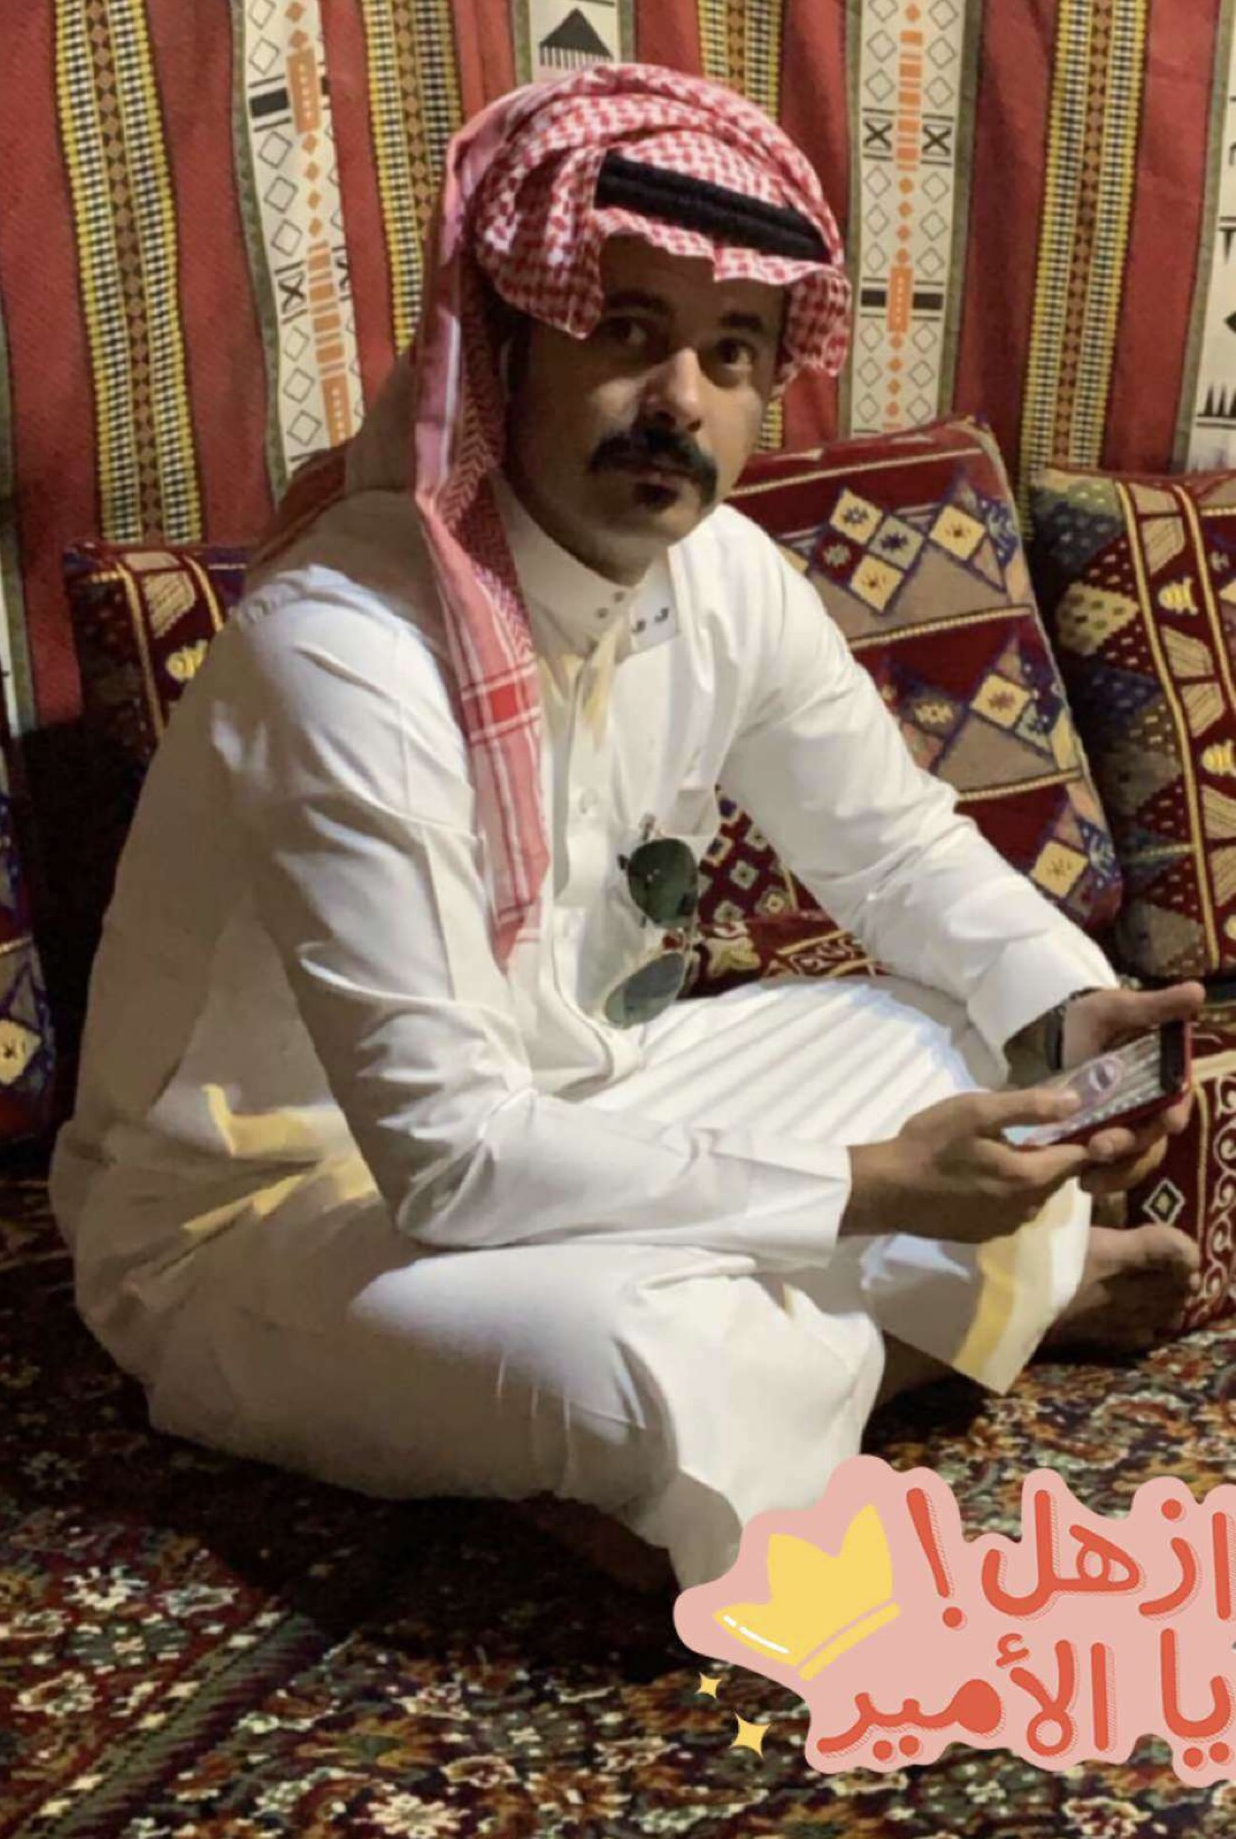 A thumbnail of Hazim wearing an informal Saudi gown.